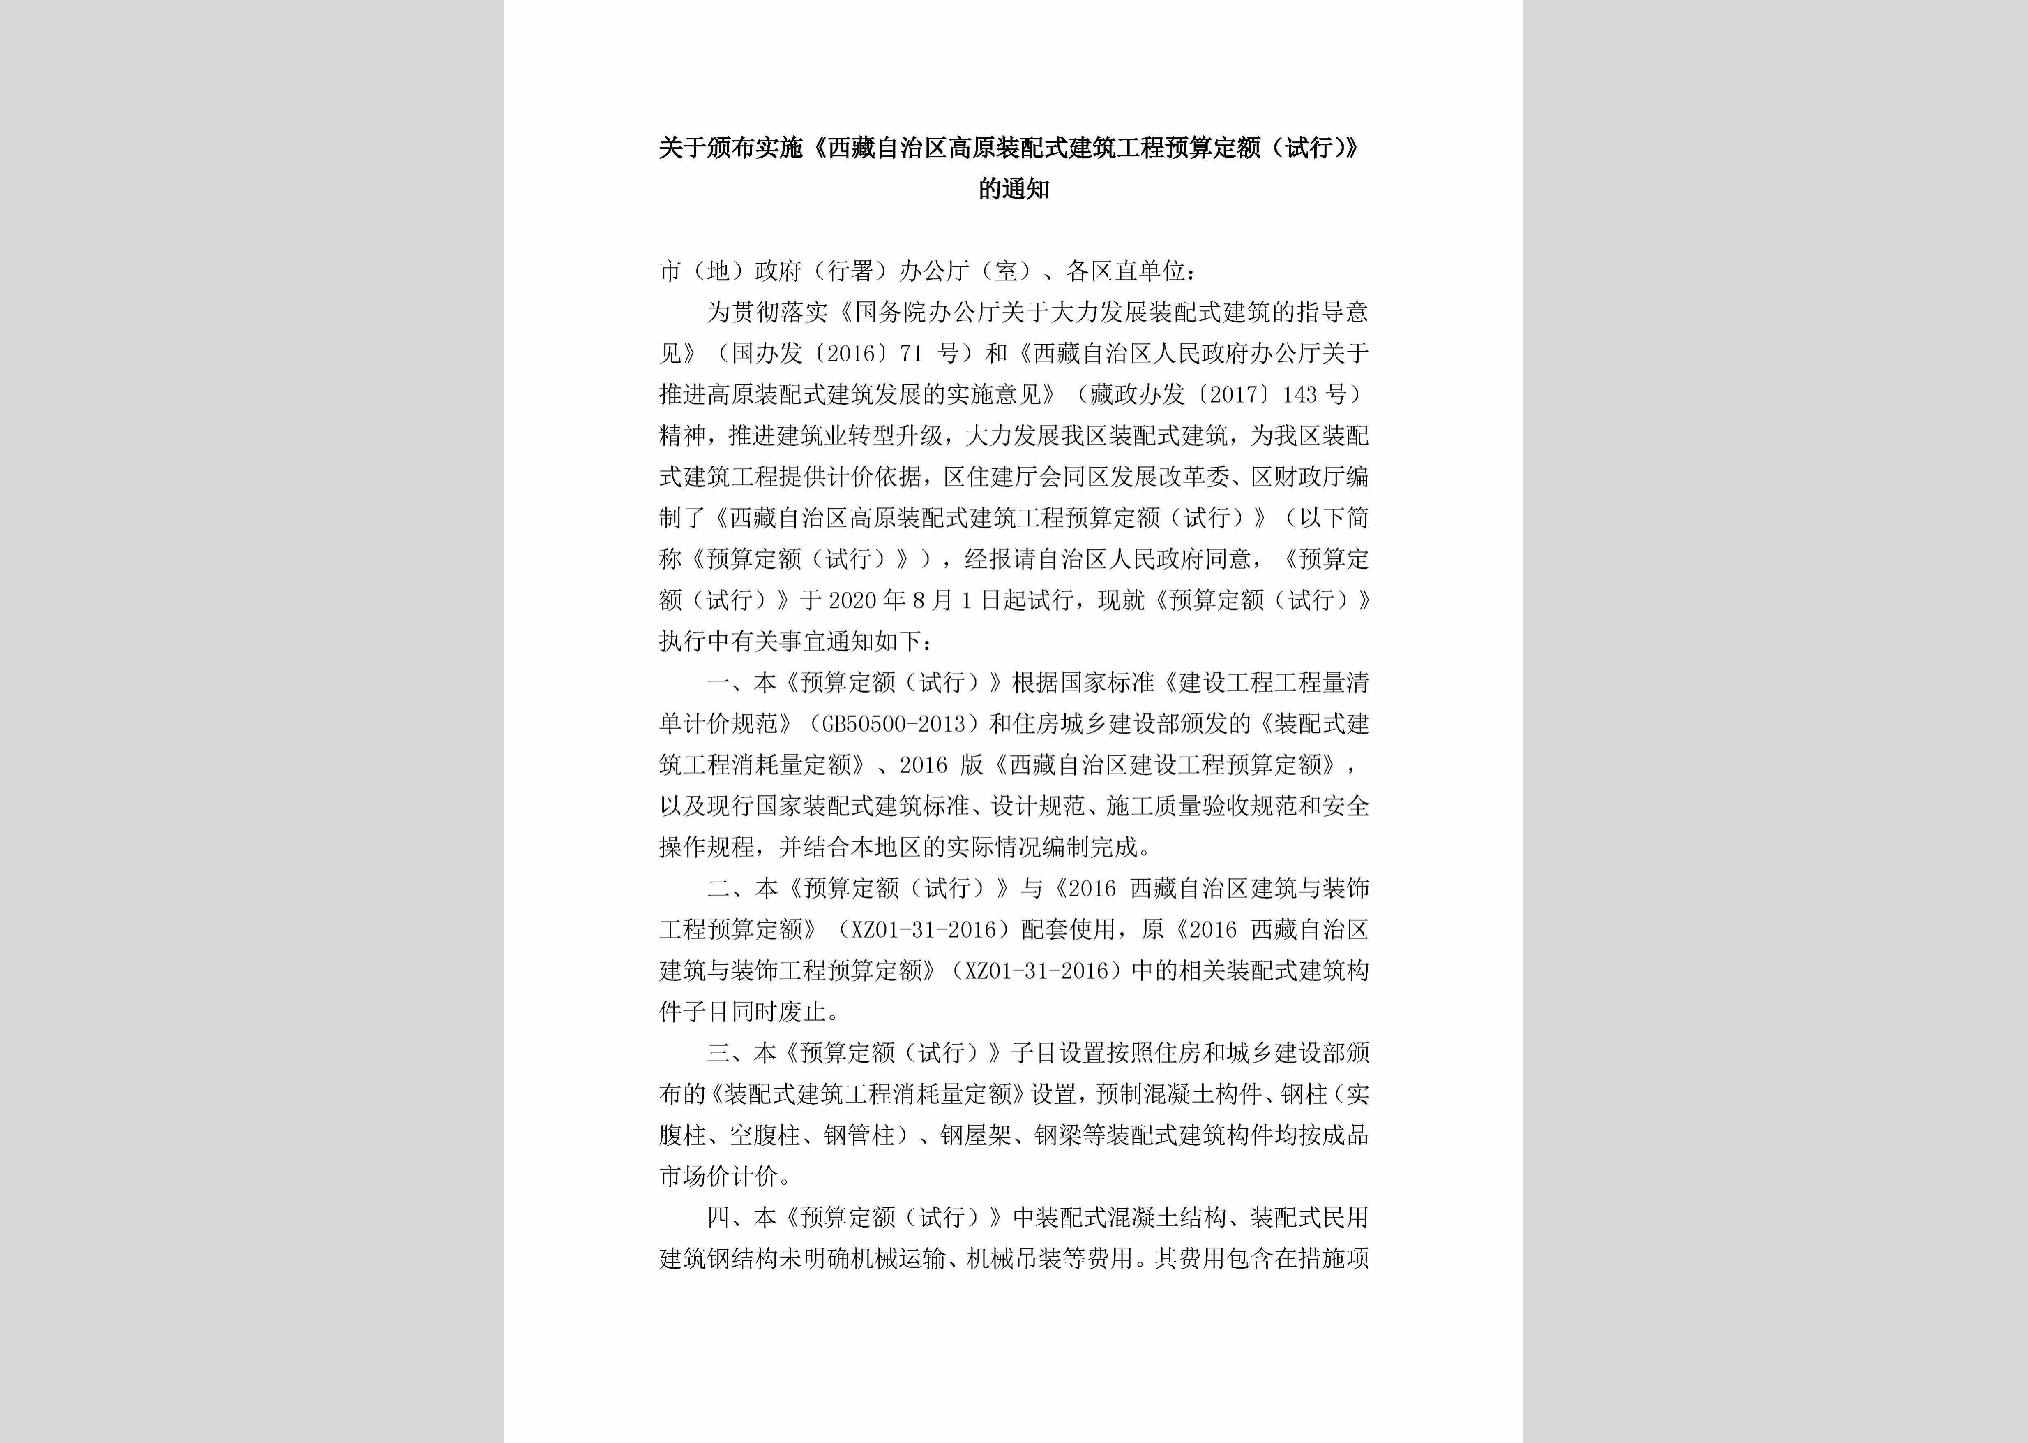 ZZQGYZPS：关于颁布实施《西藏自治区高原装配式建筑工程预算定额（试行）》的通知